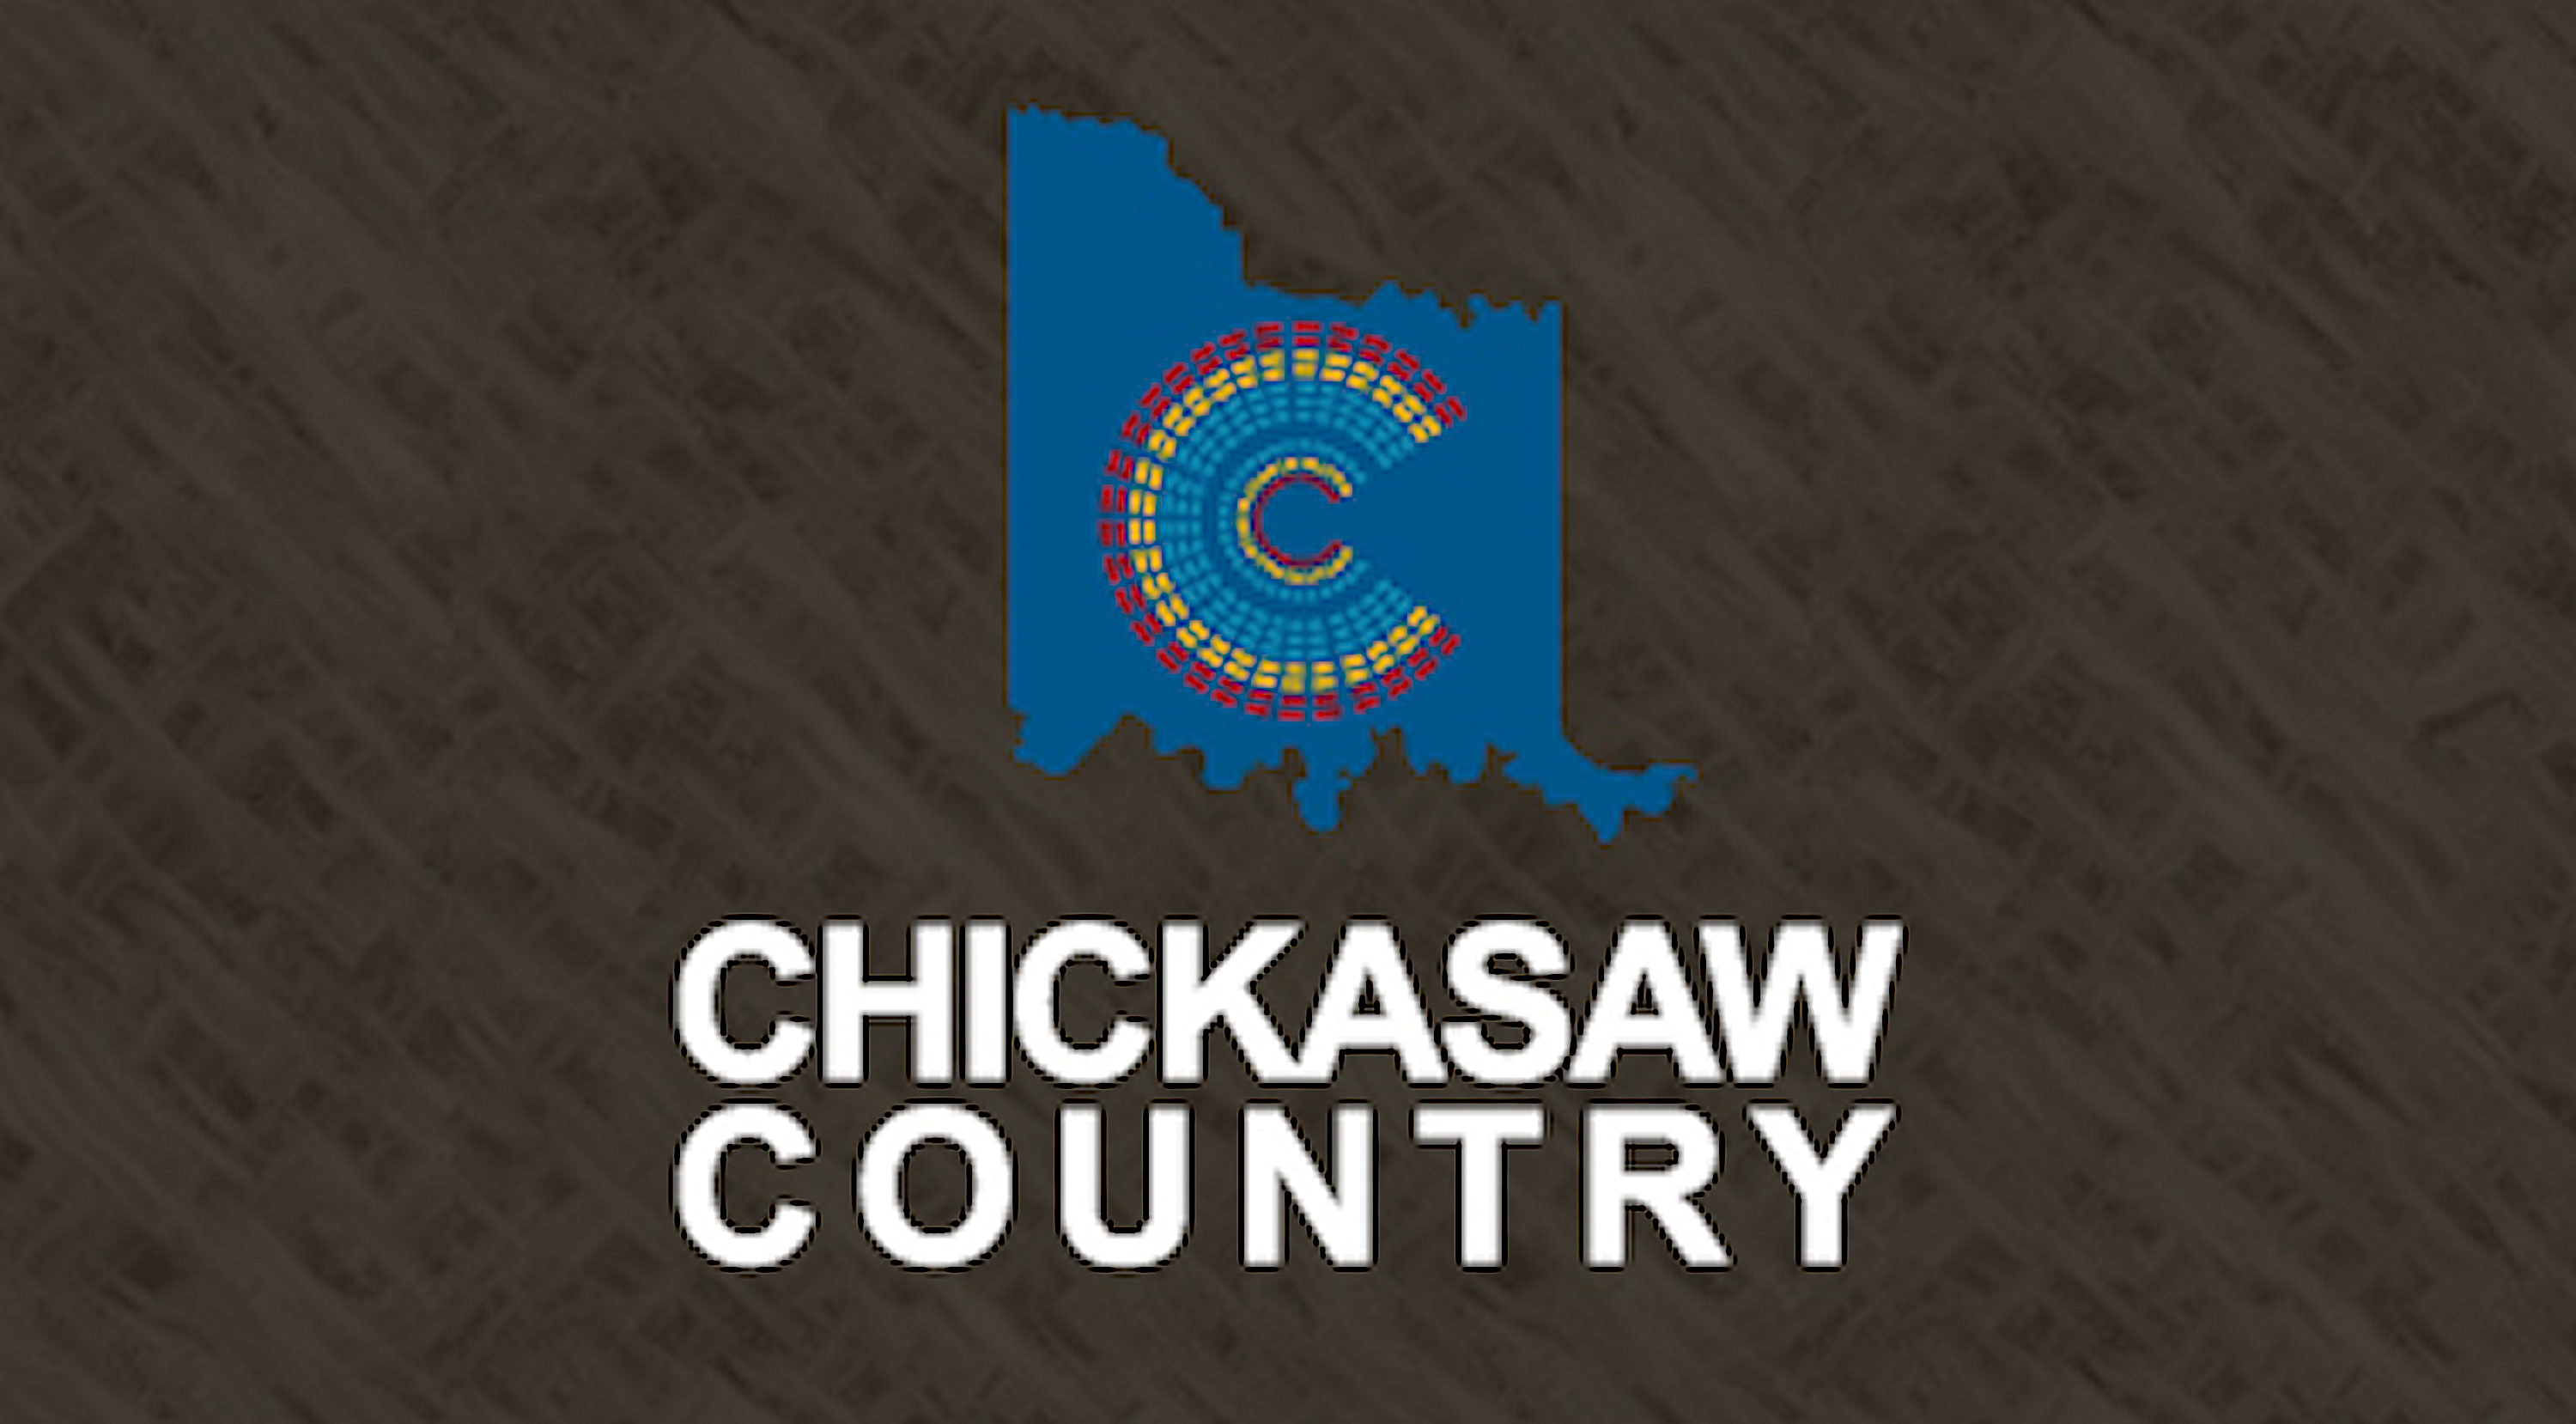 Chickaswa Country